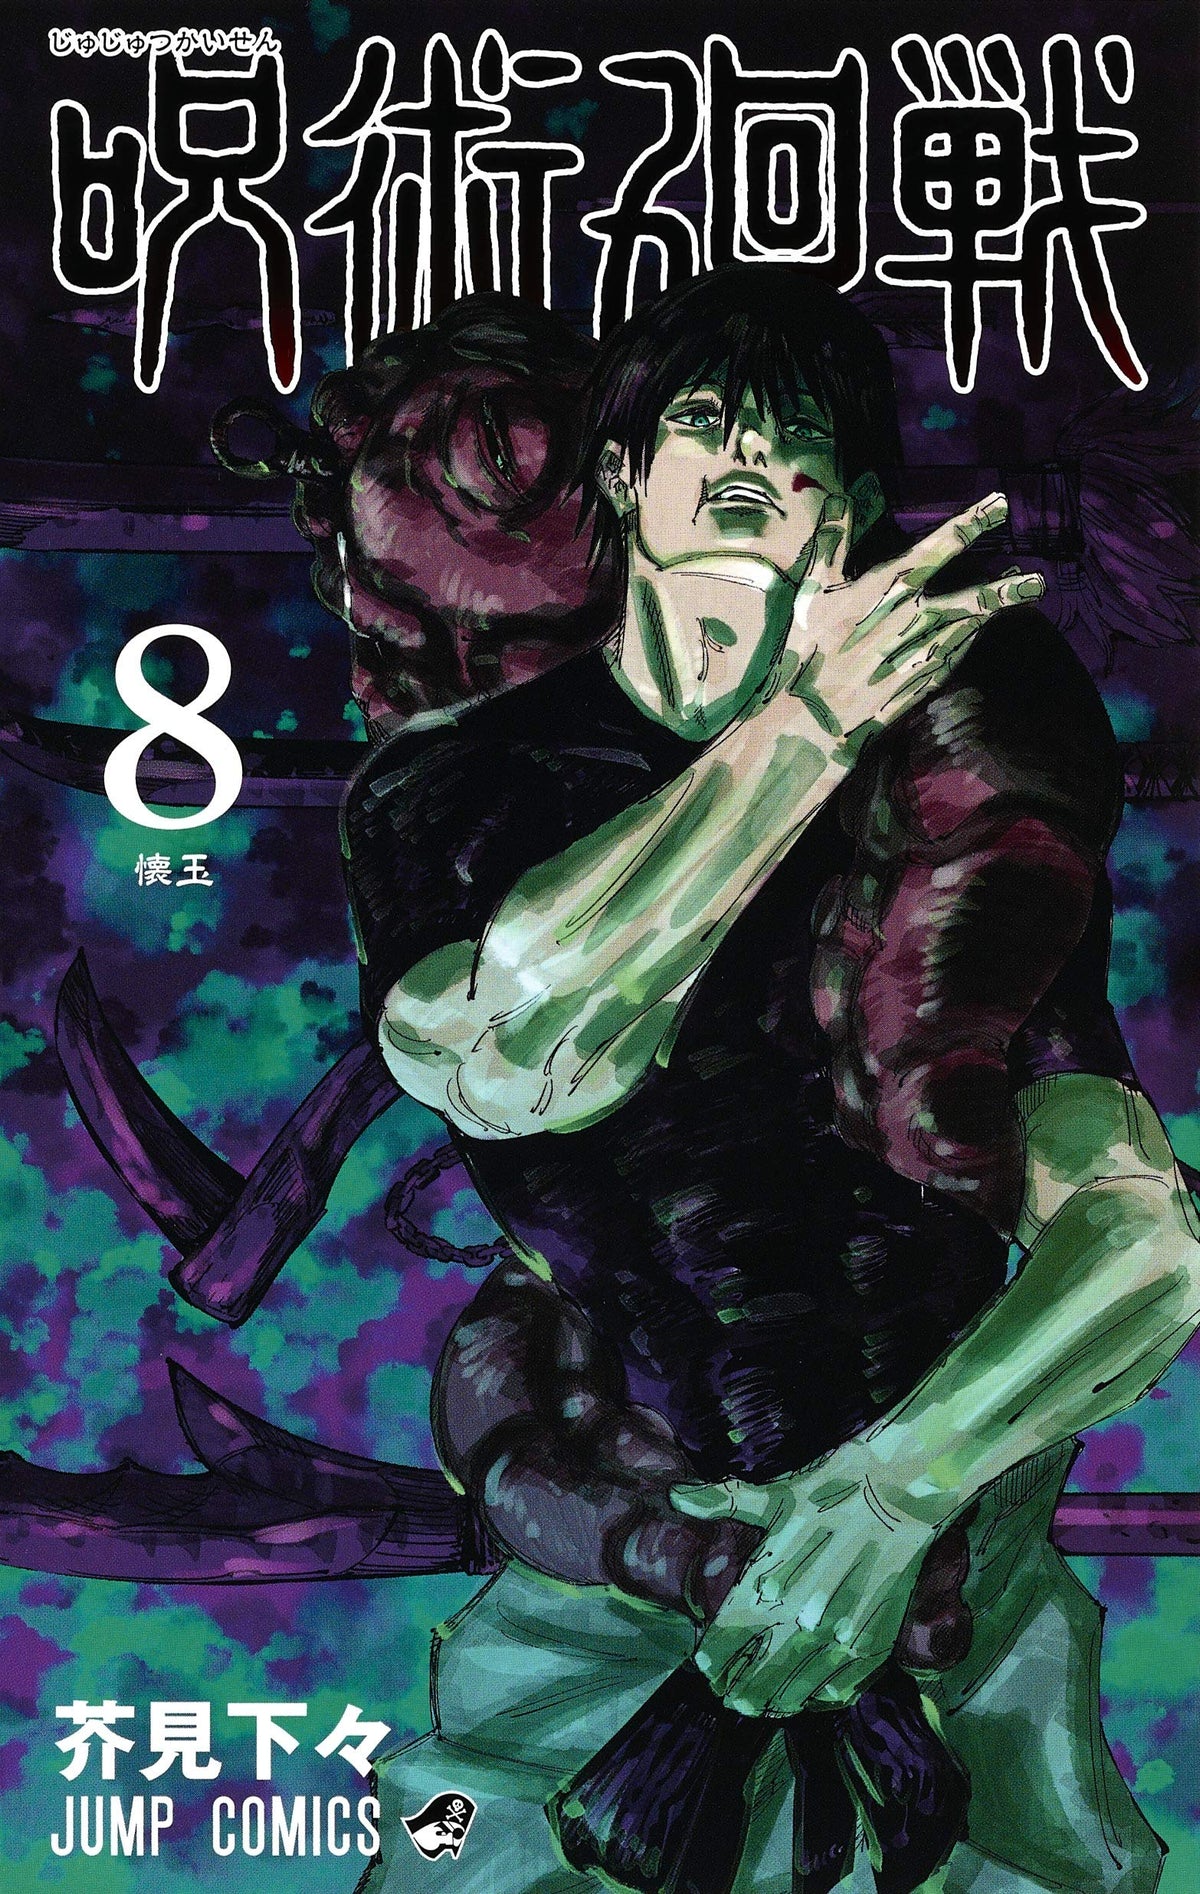 Jujutsu Kaisen Vol.20 Limited Edition by Gege Akutami - Manga from Japan